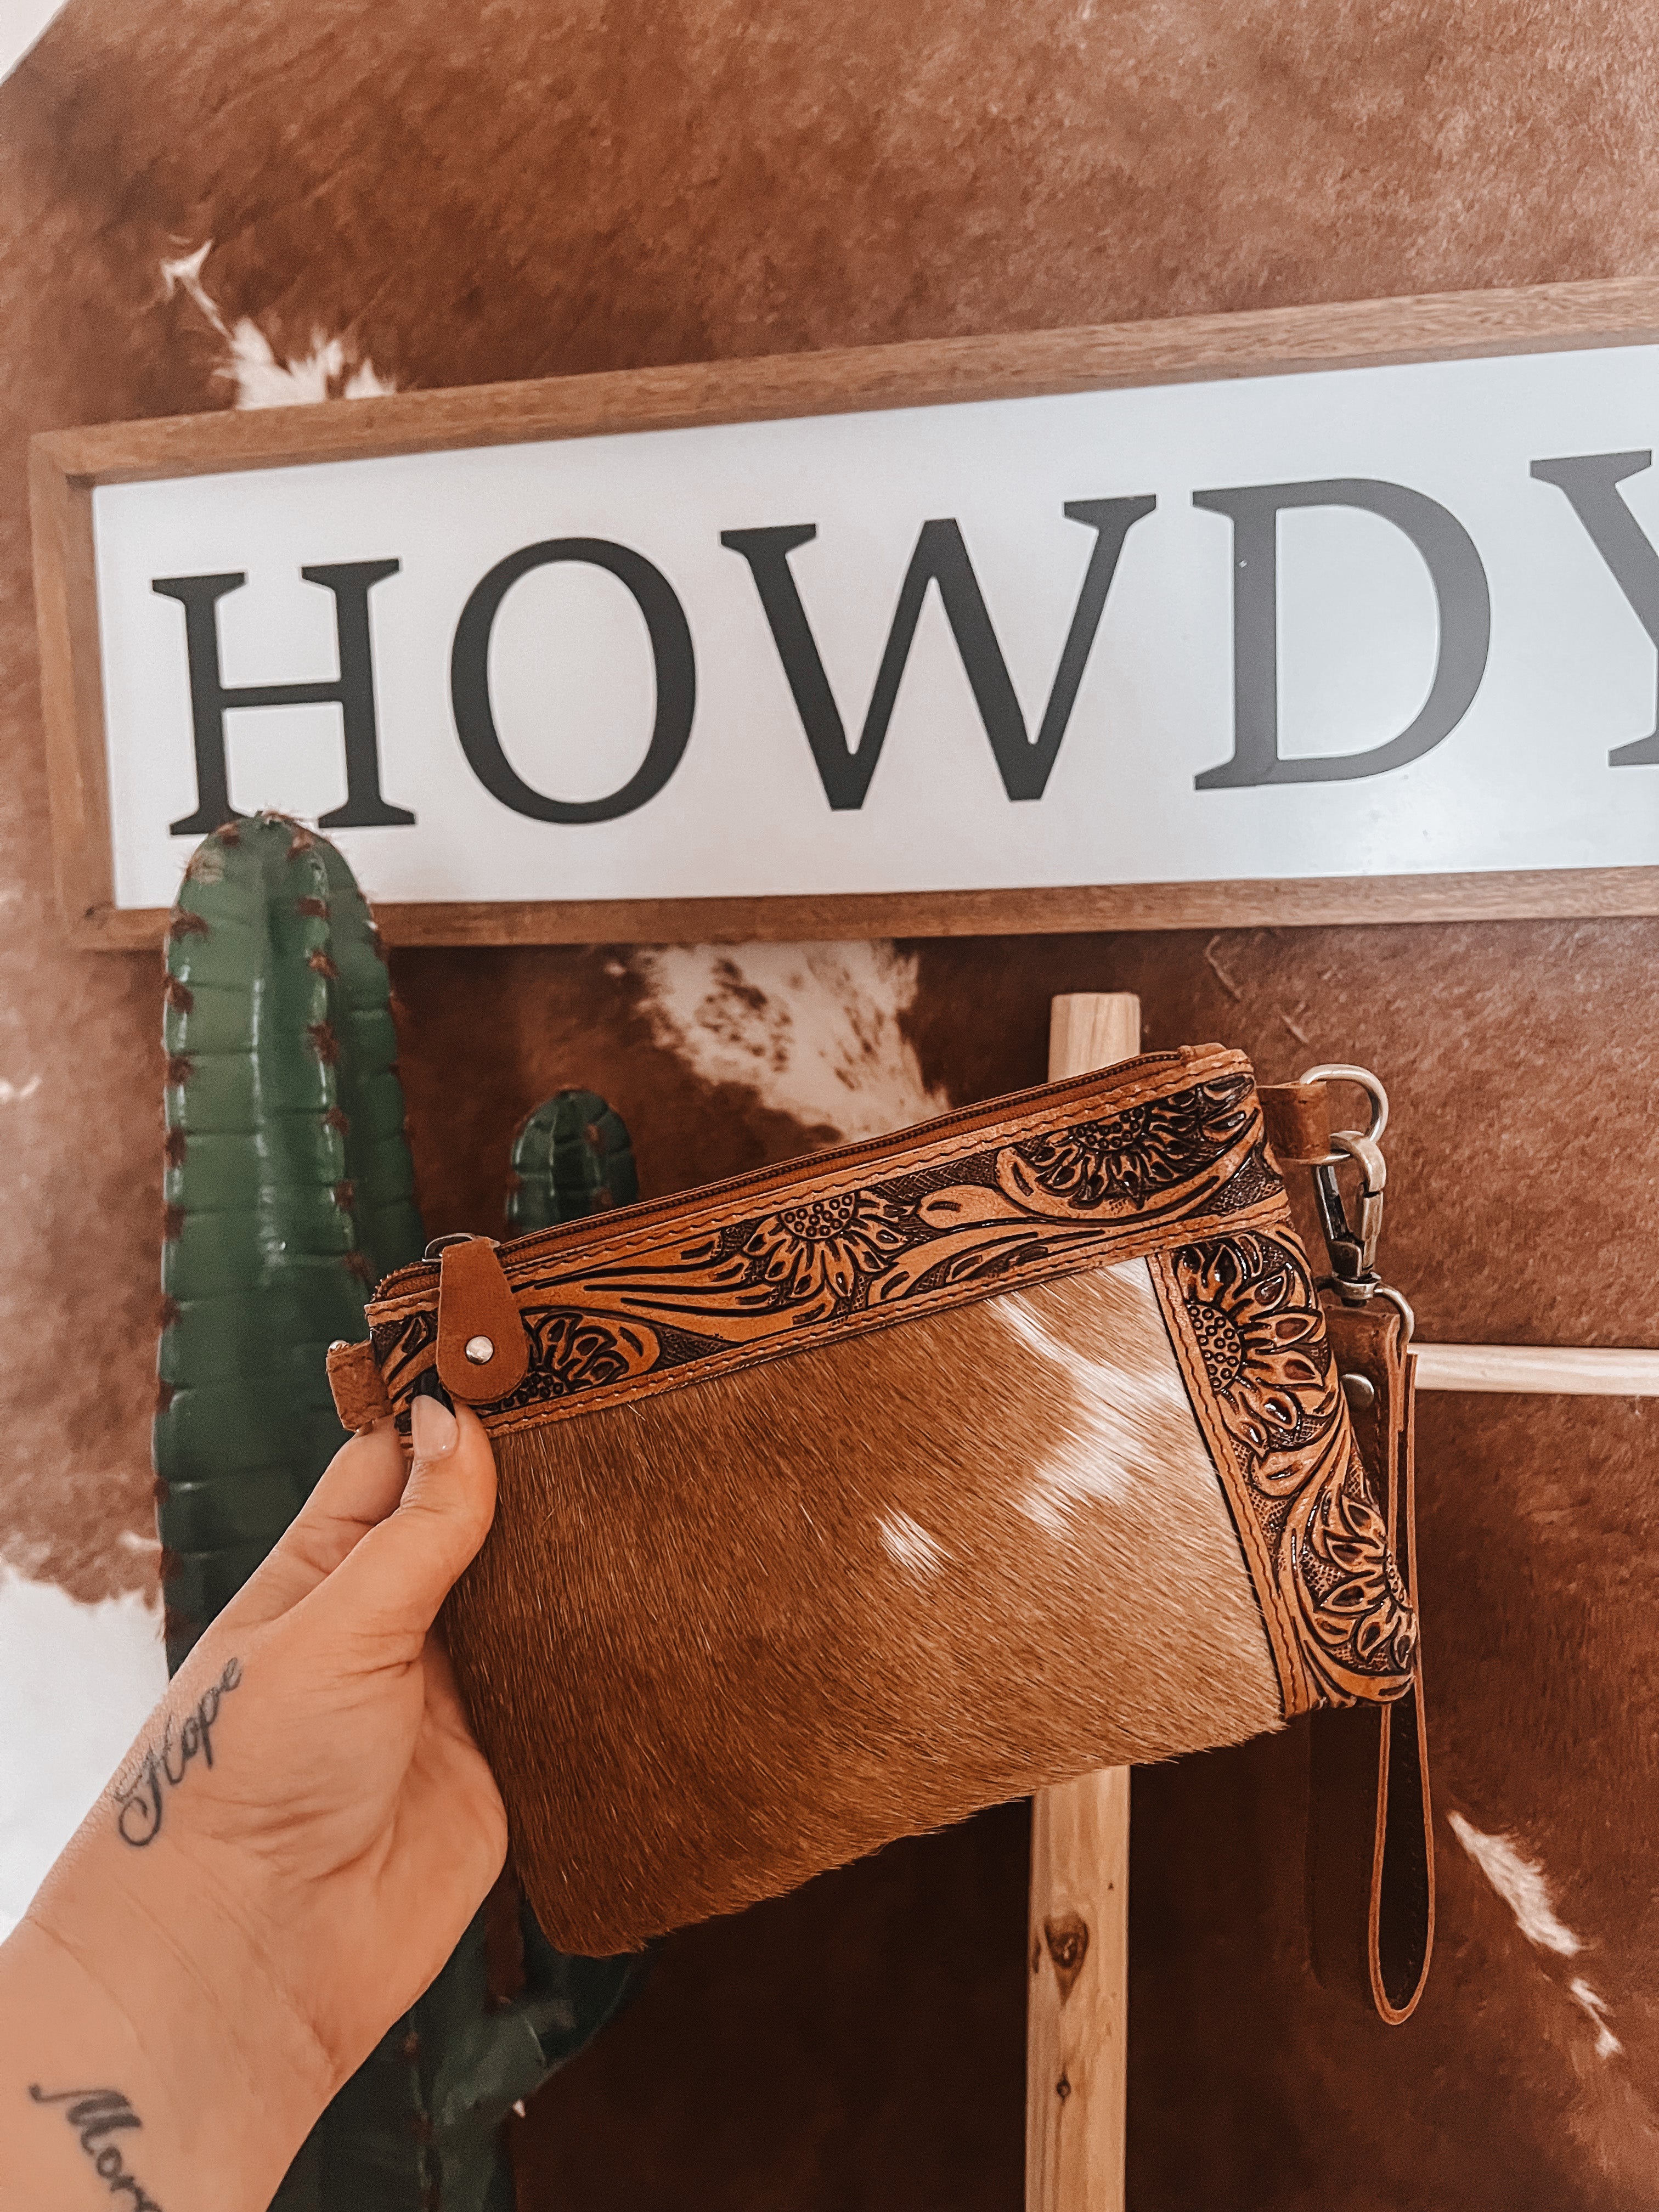 Handmade Shoulder Bag, Vintage Small Brown Leather Purse - Yahoo Shopping